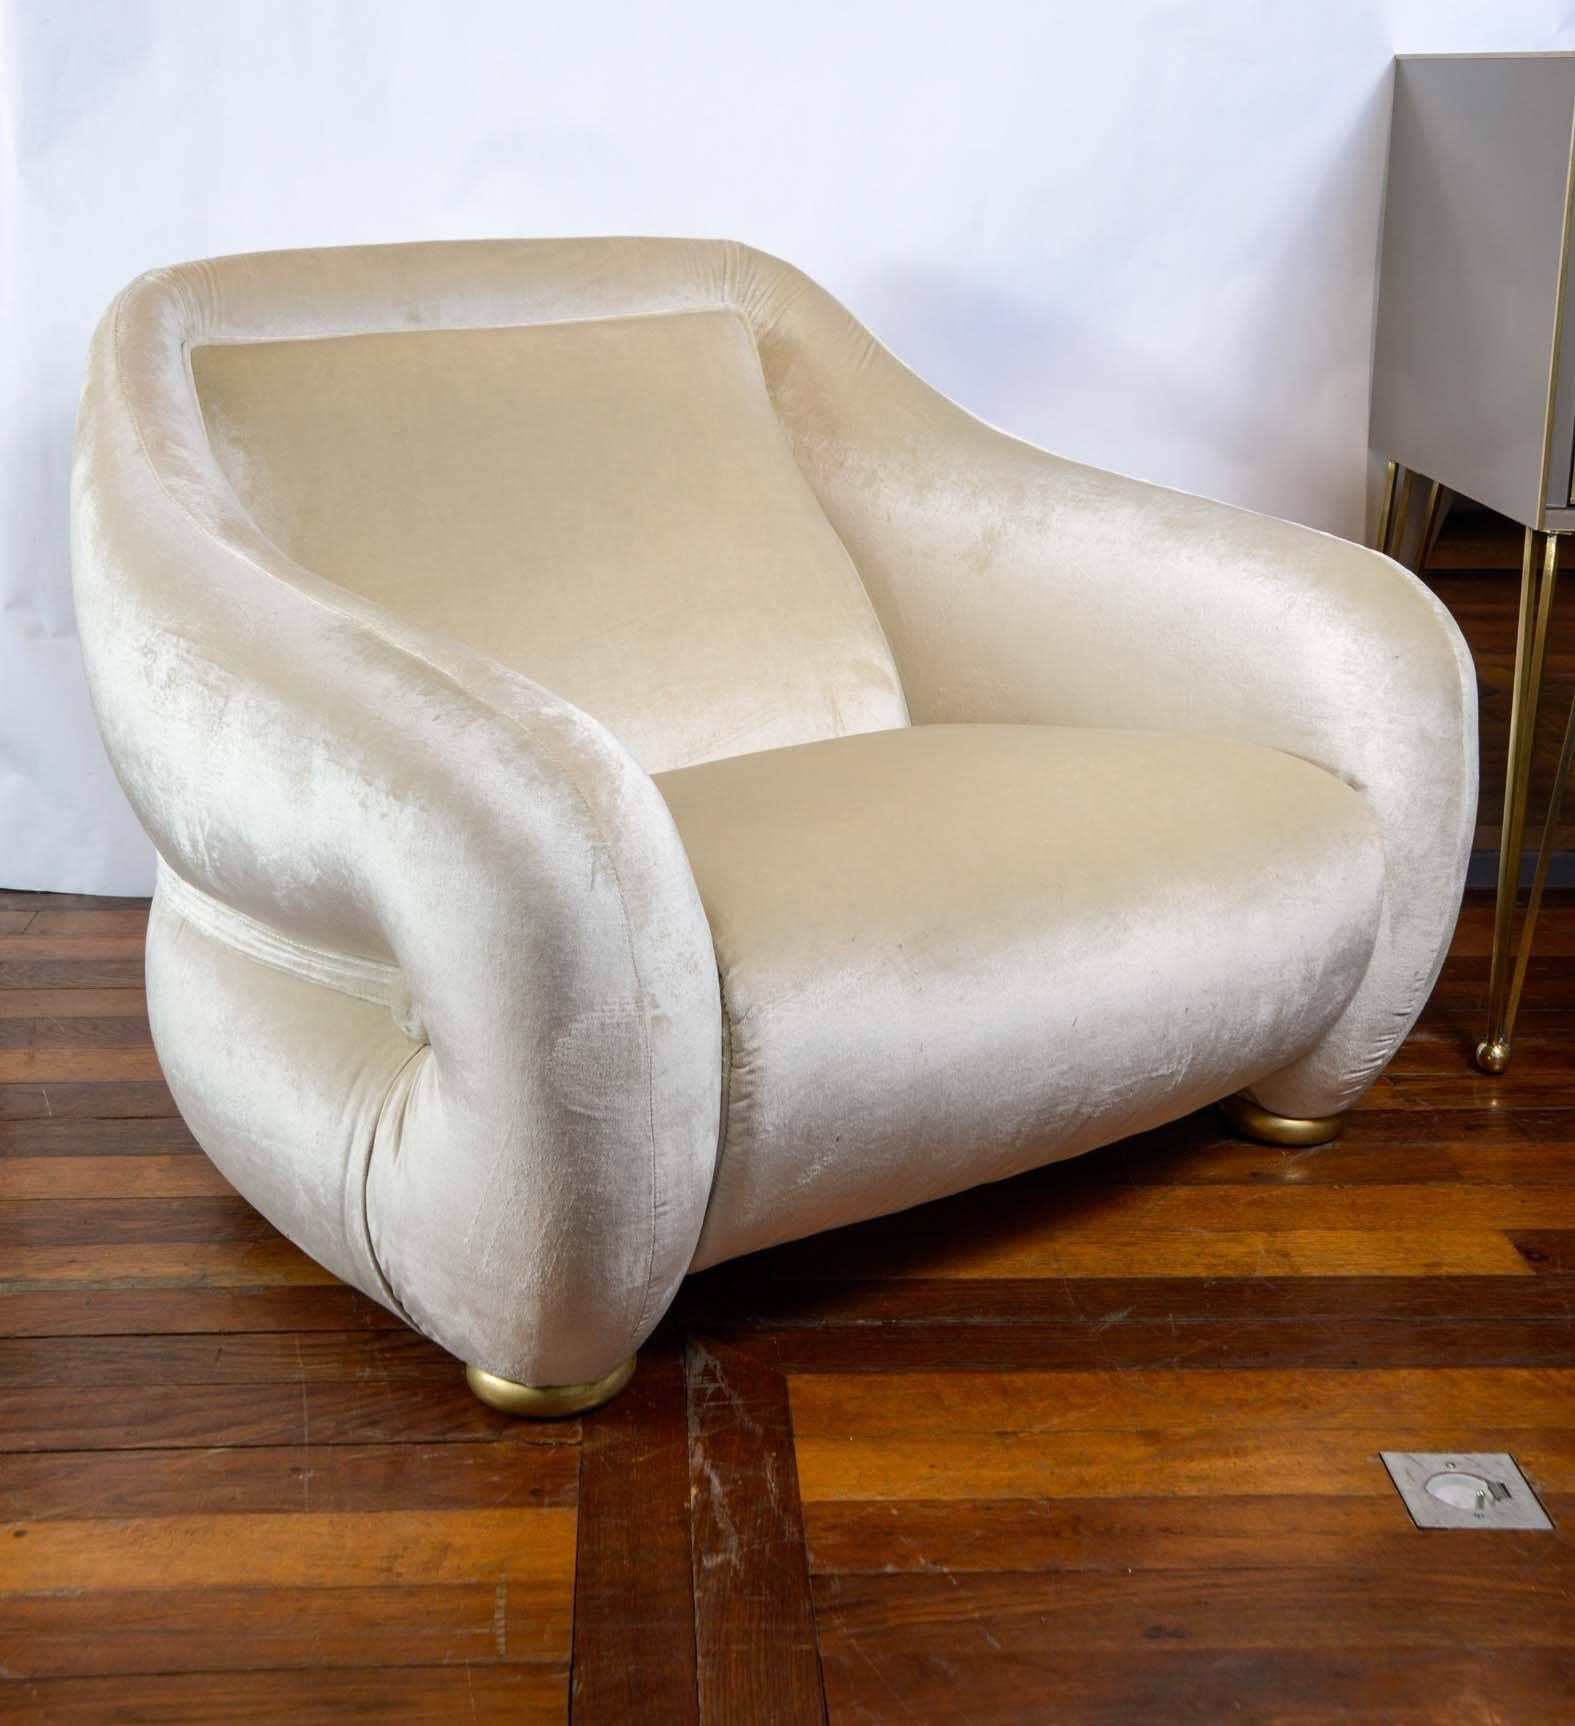 Pair of ivory velvet vintage armchairs, wood feet, very comfortable seating.